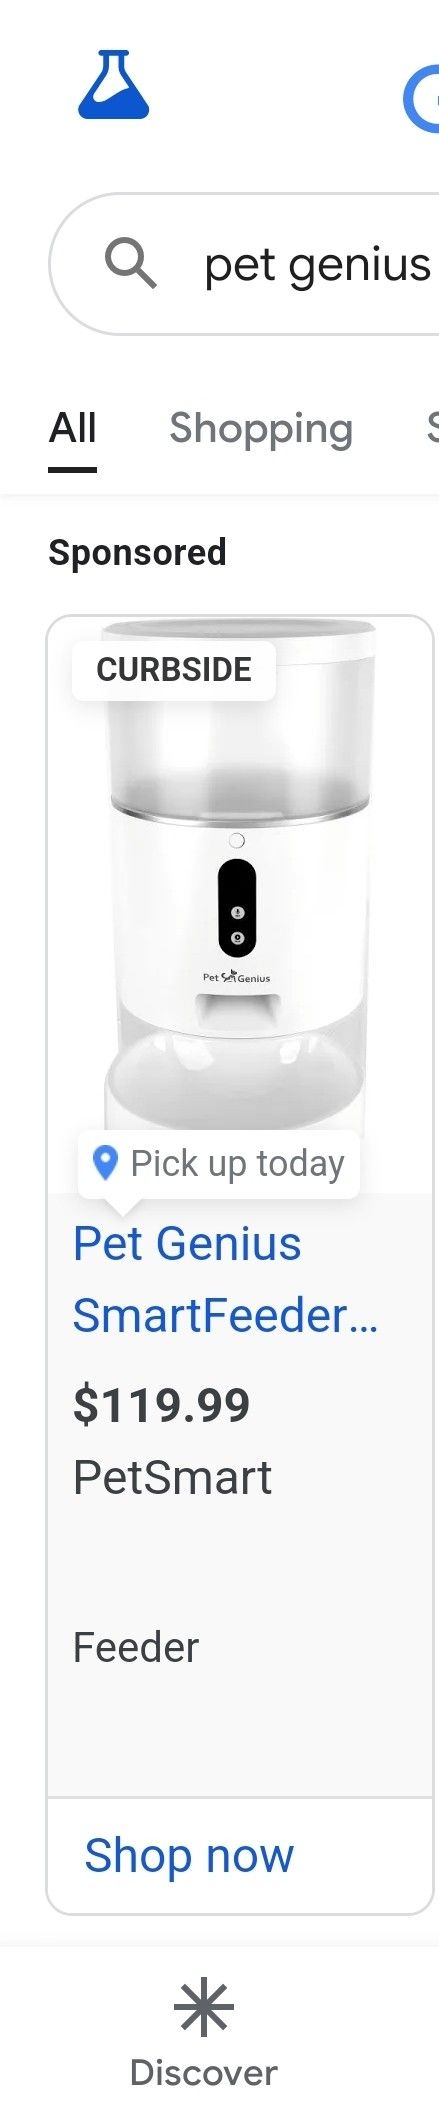 Pet Genius SmartFeeder W/live WiFi Camera